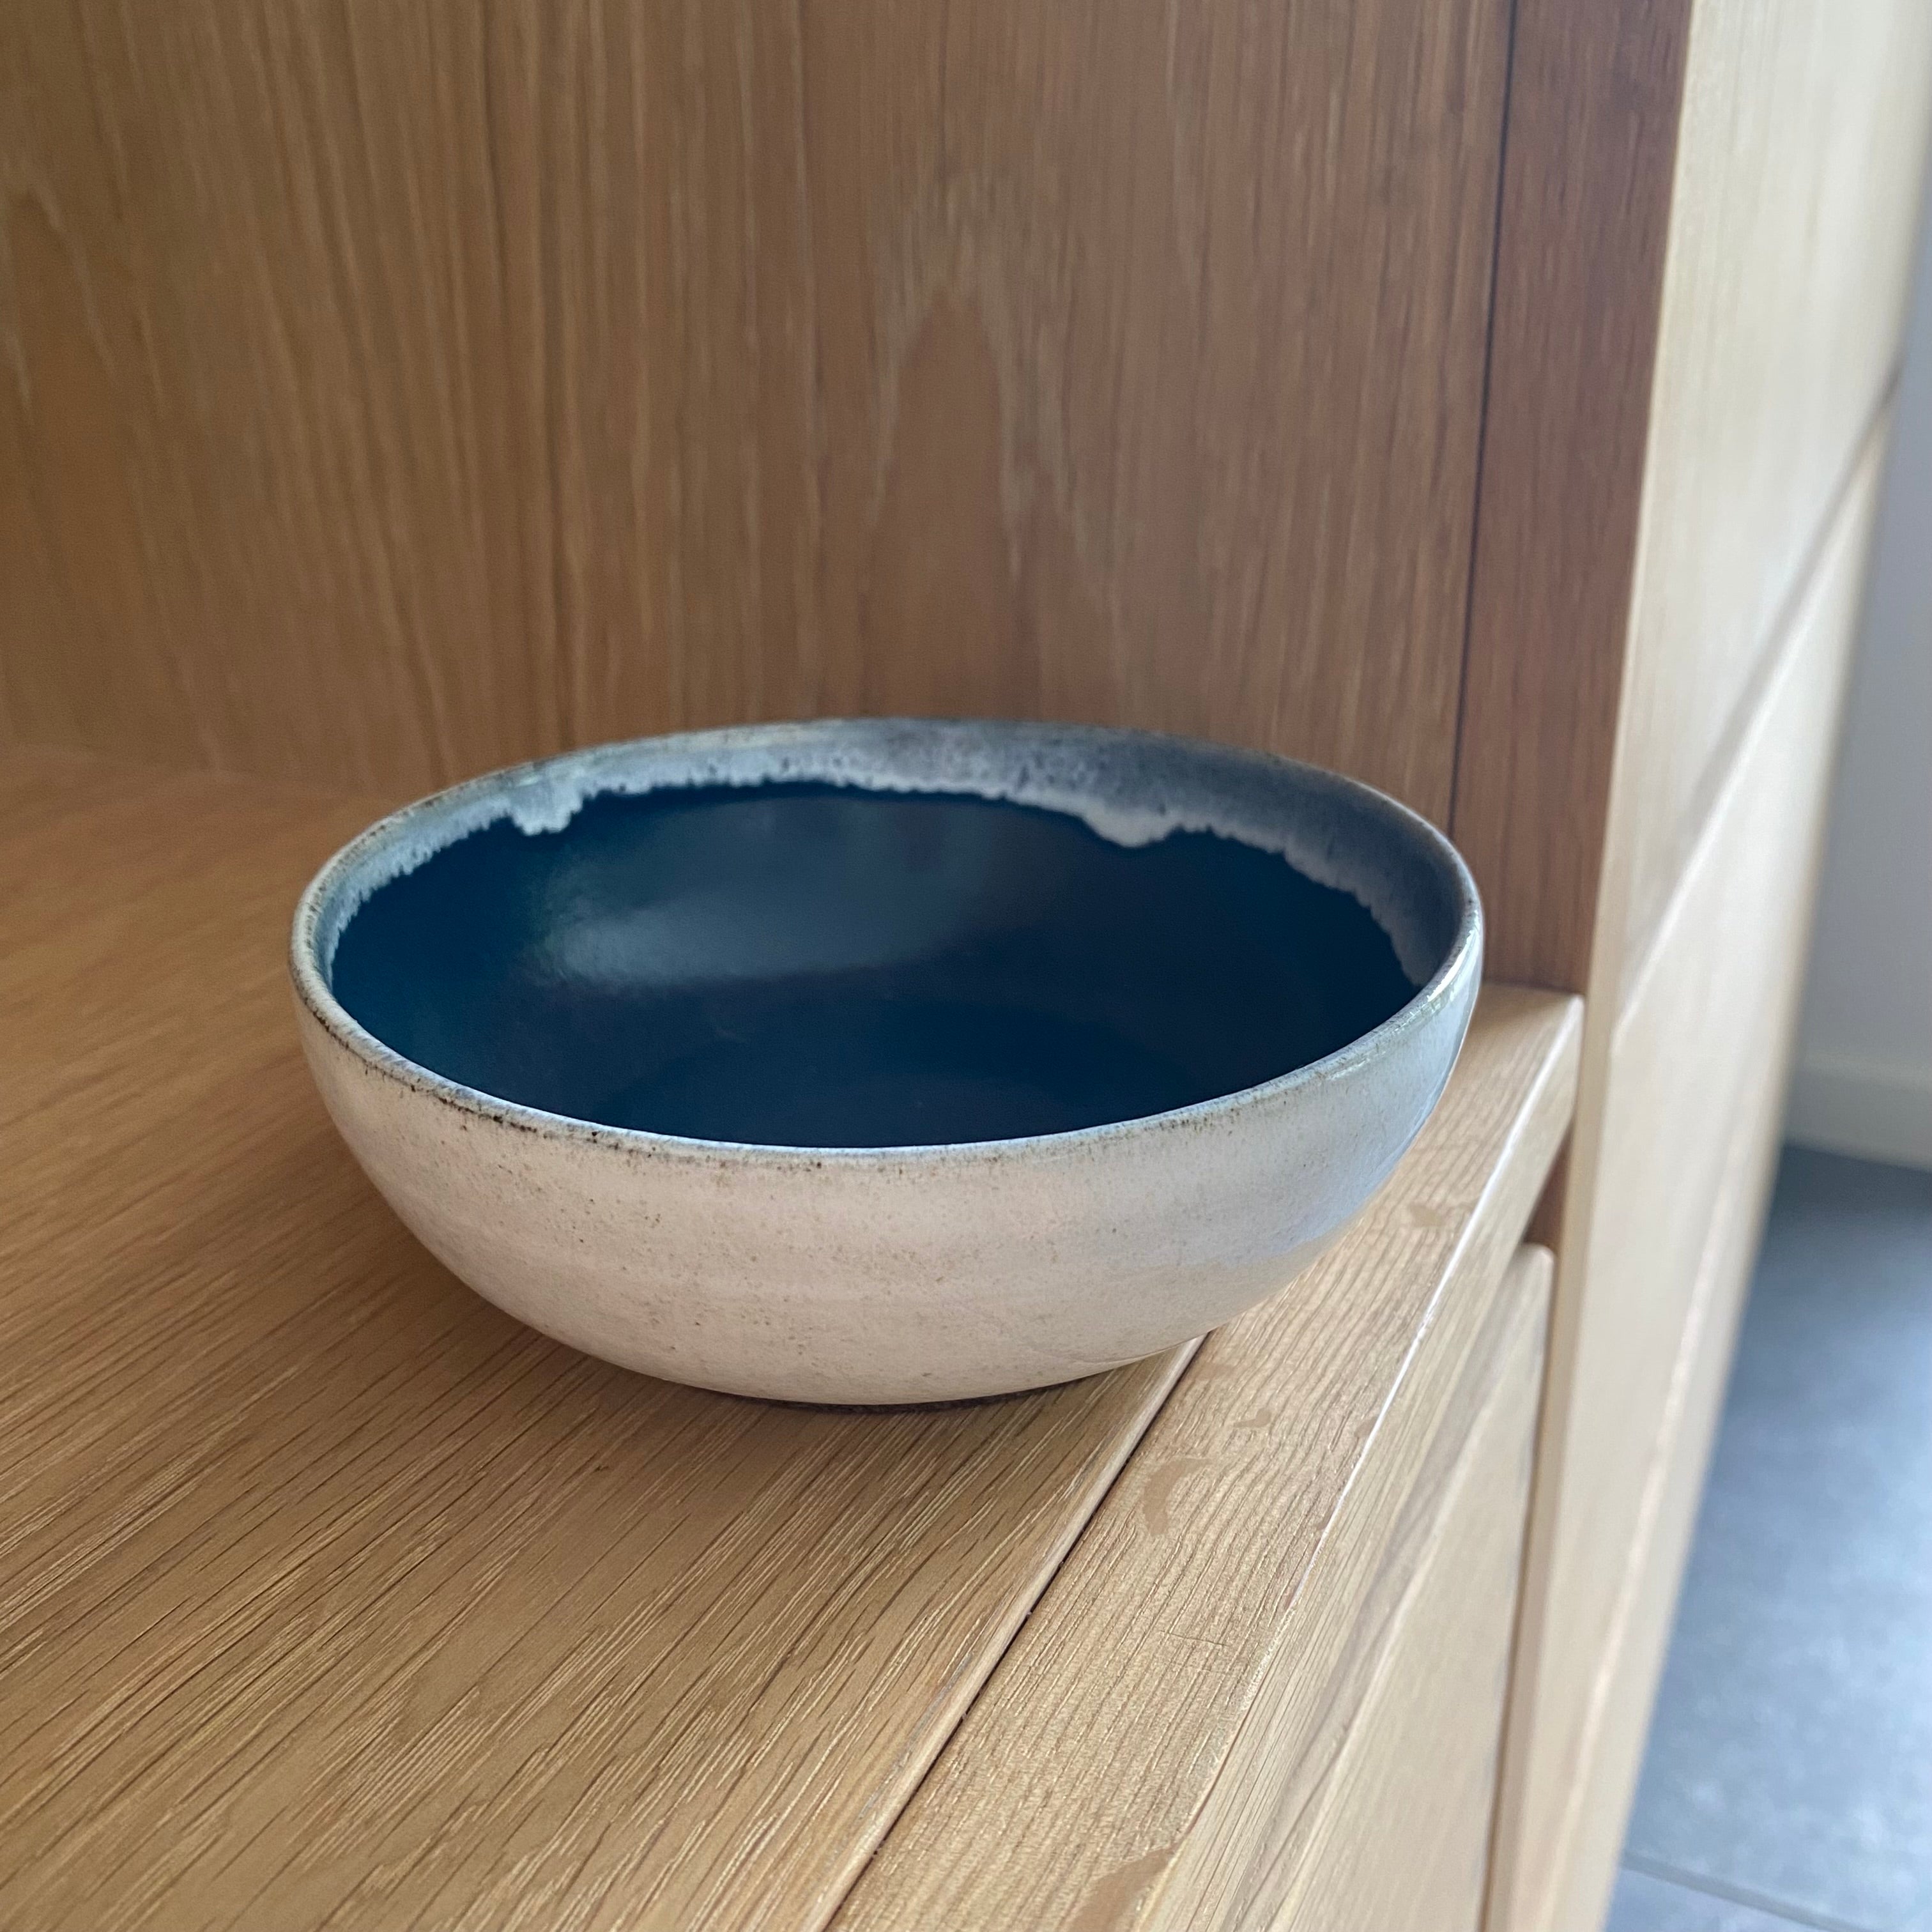 Tasja P small breakfast bowl - off white and dark blue